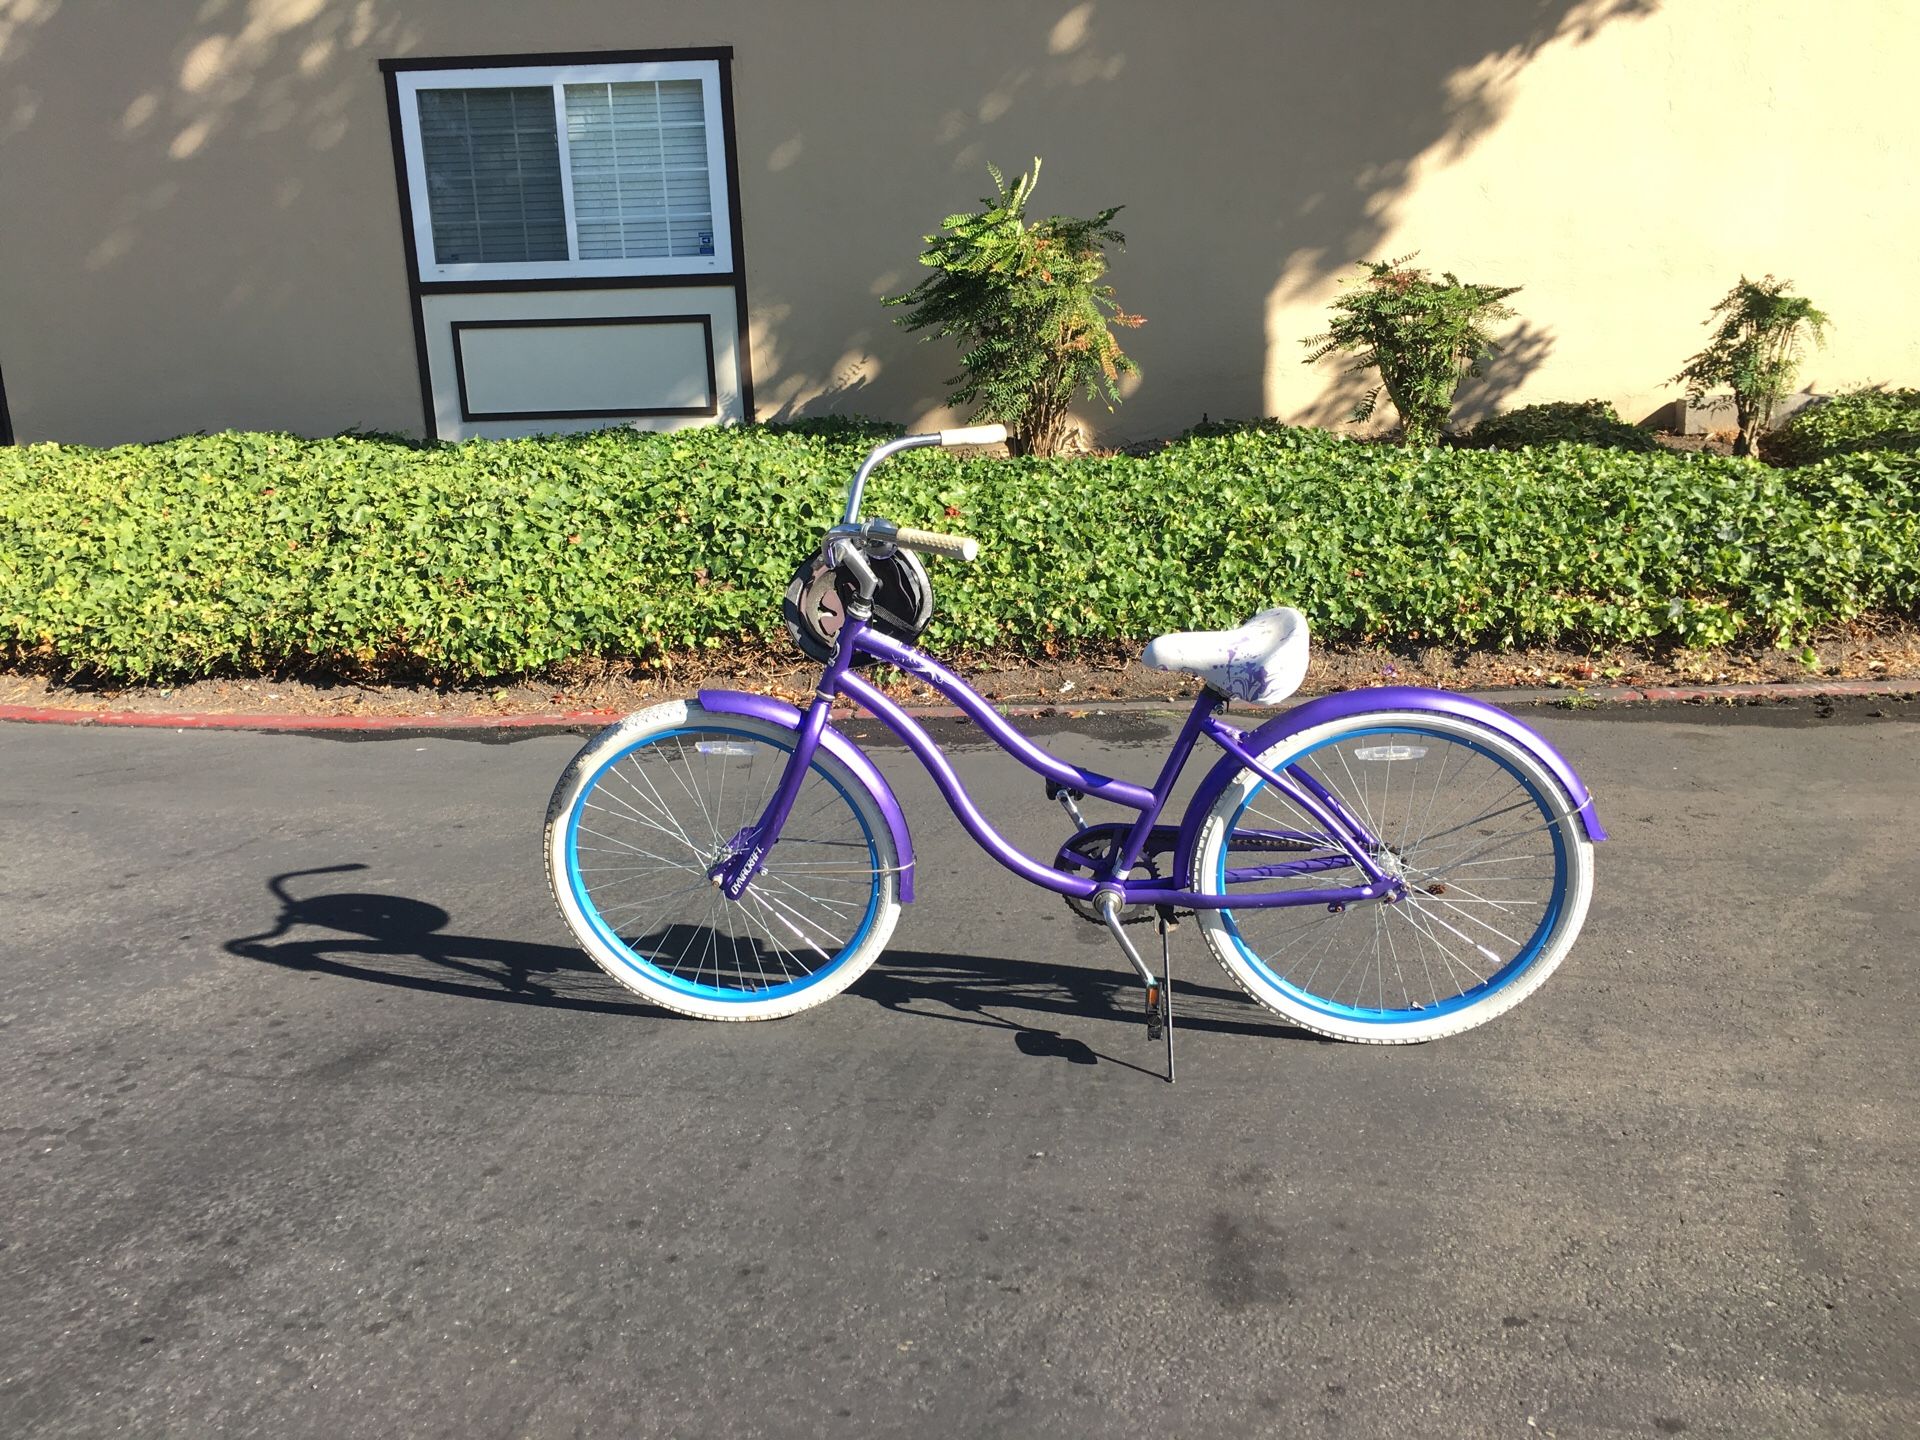 Purple bike